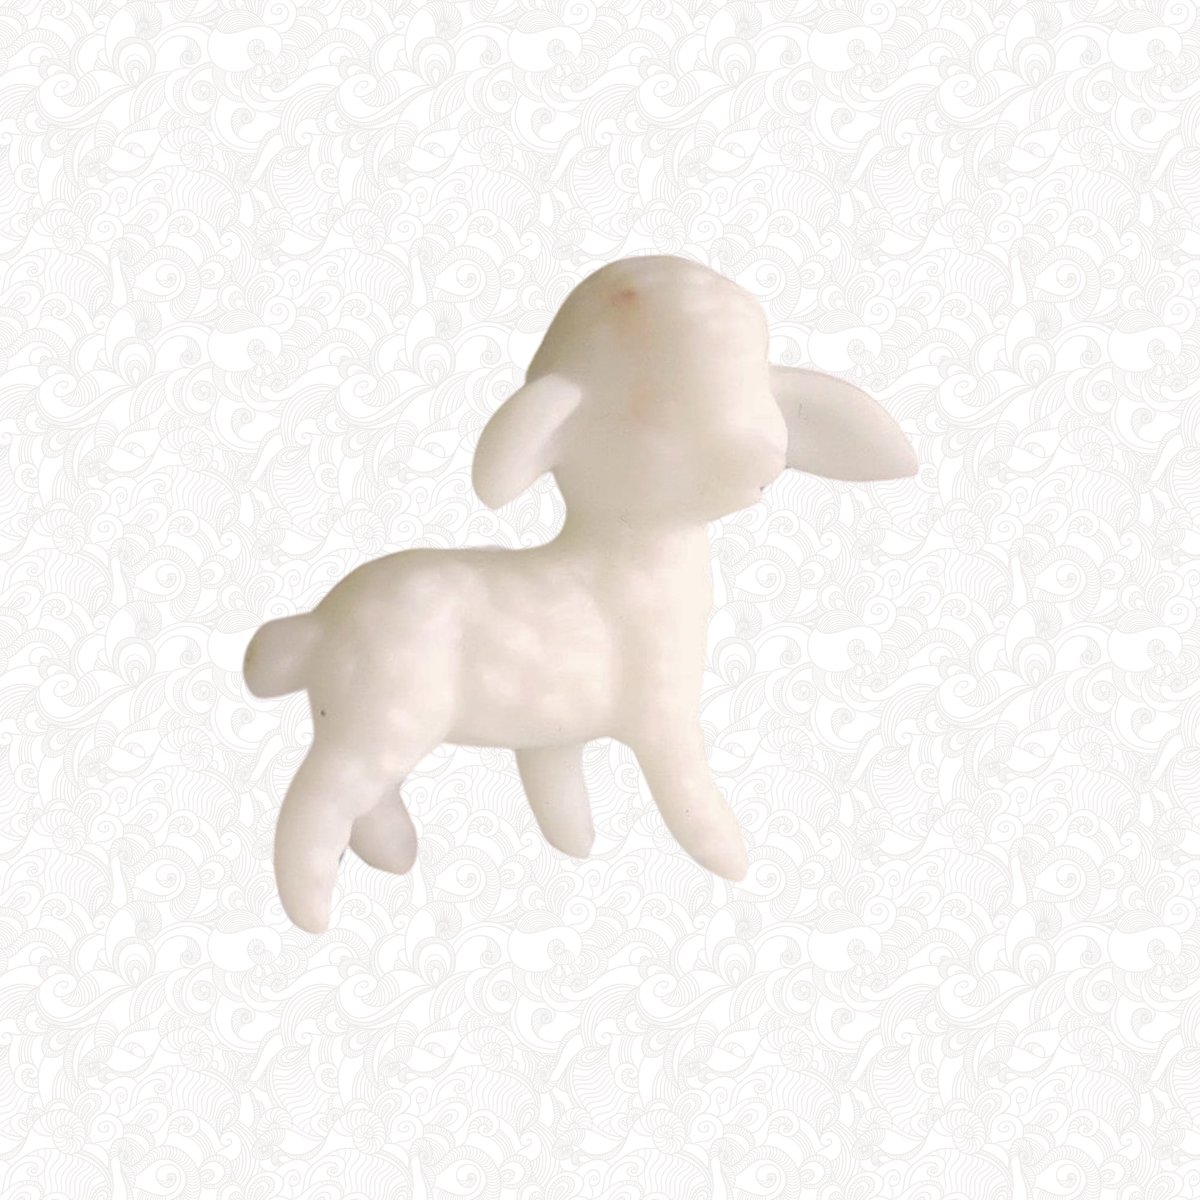 Vintage Mini White Plastic Sheep or Lamb, Miniature 1/12 scale Animal Figurine for Dollhouses or Crafts tuppu.net/7a74ba0c #MomDay2024 #EtsyteamUnity #SMILEtt23 #Vintage4Sale